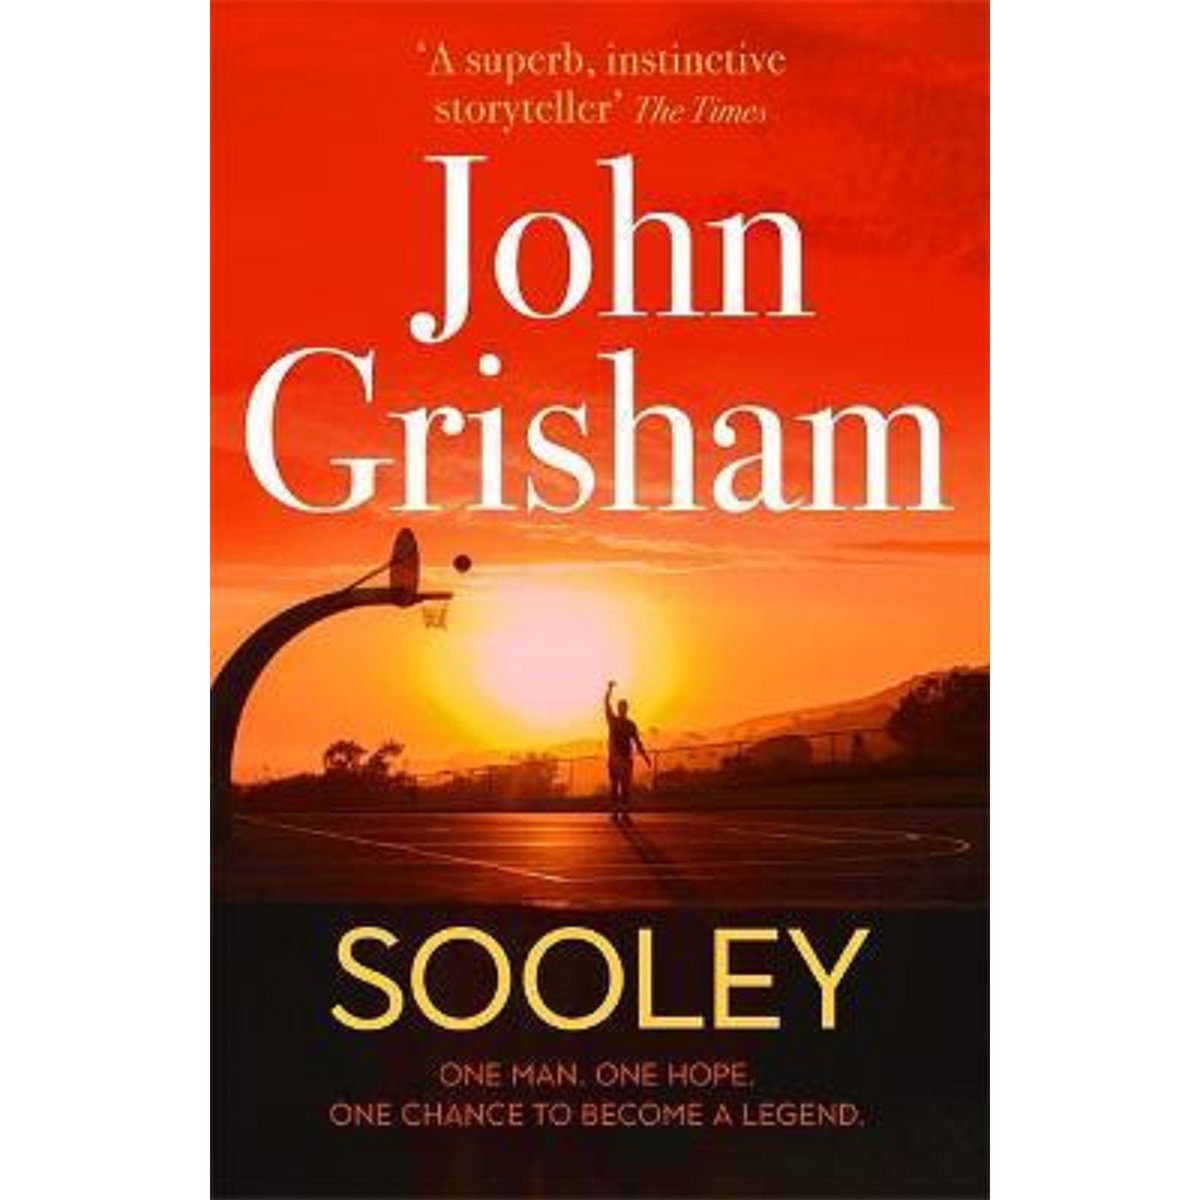 Sooley: A Novel